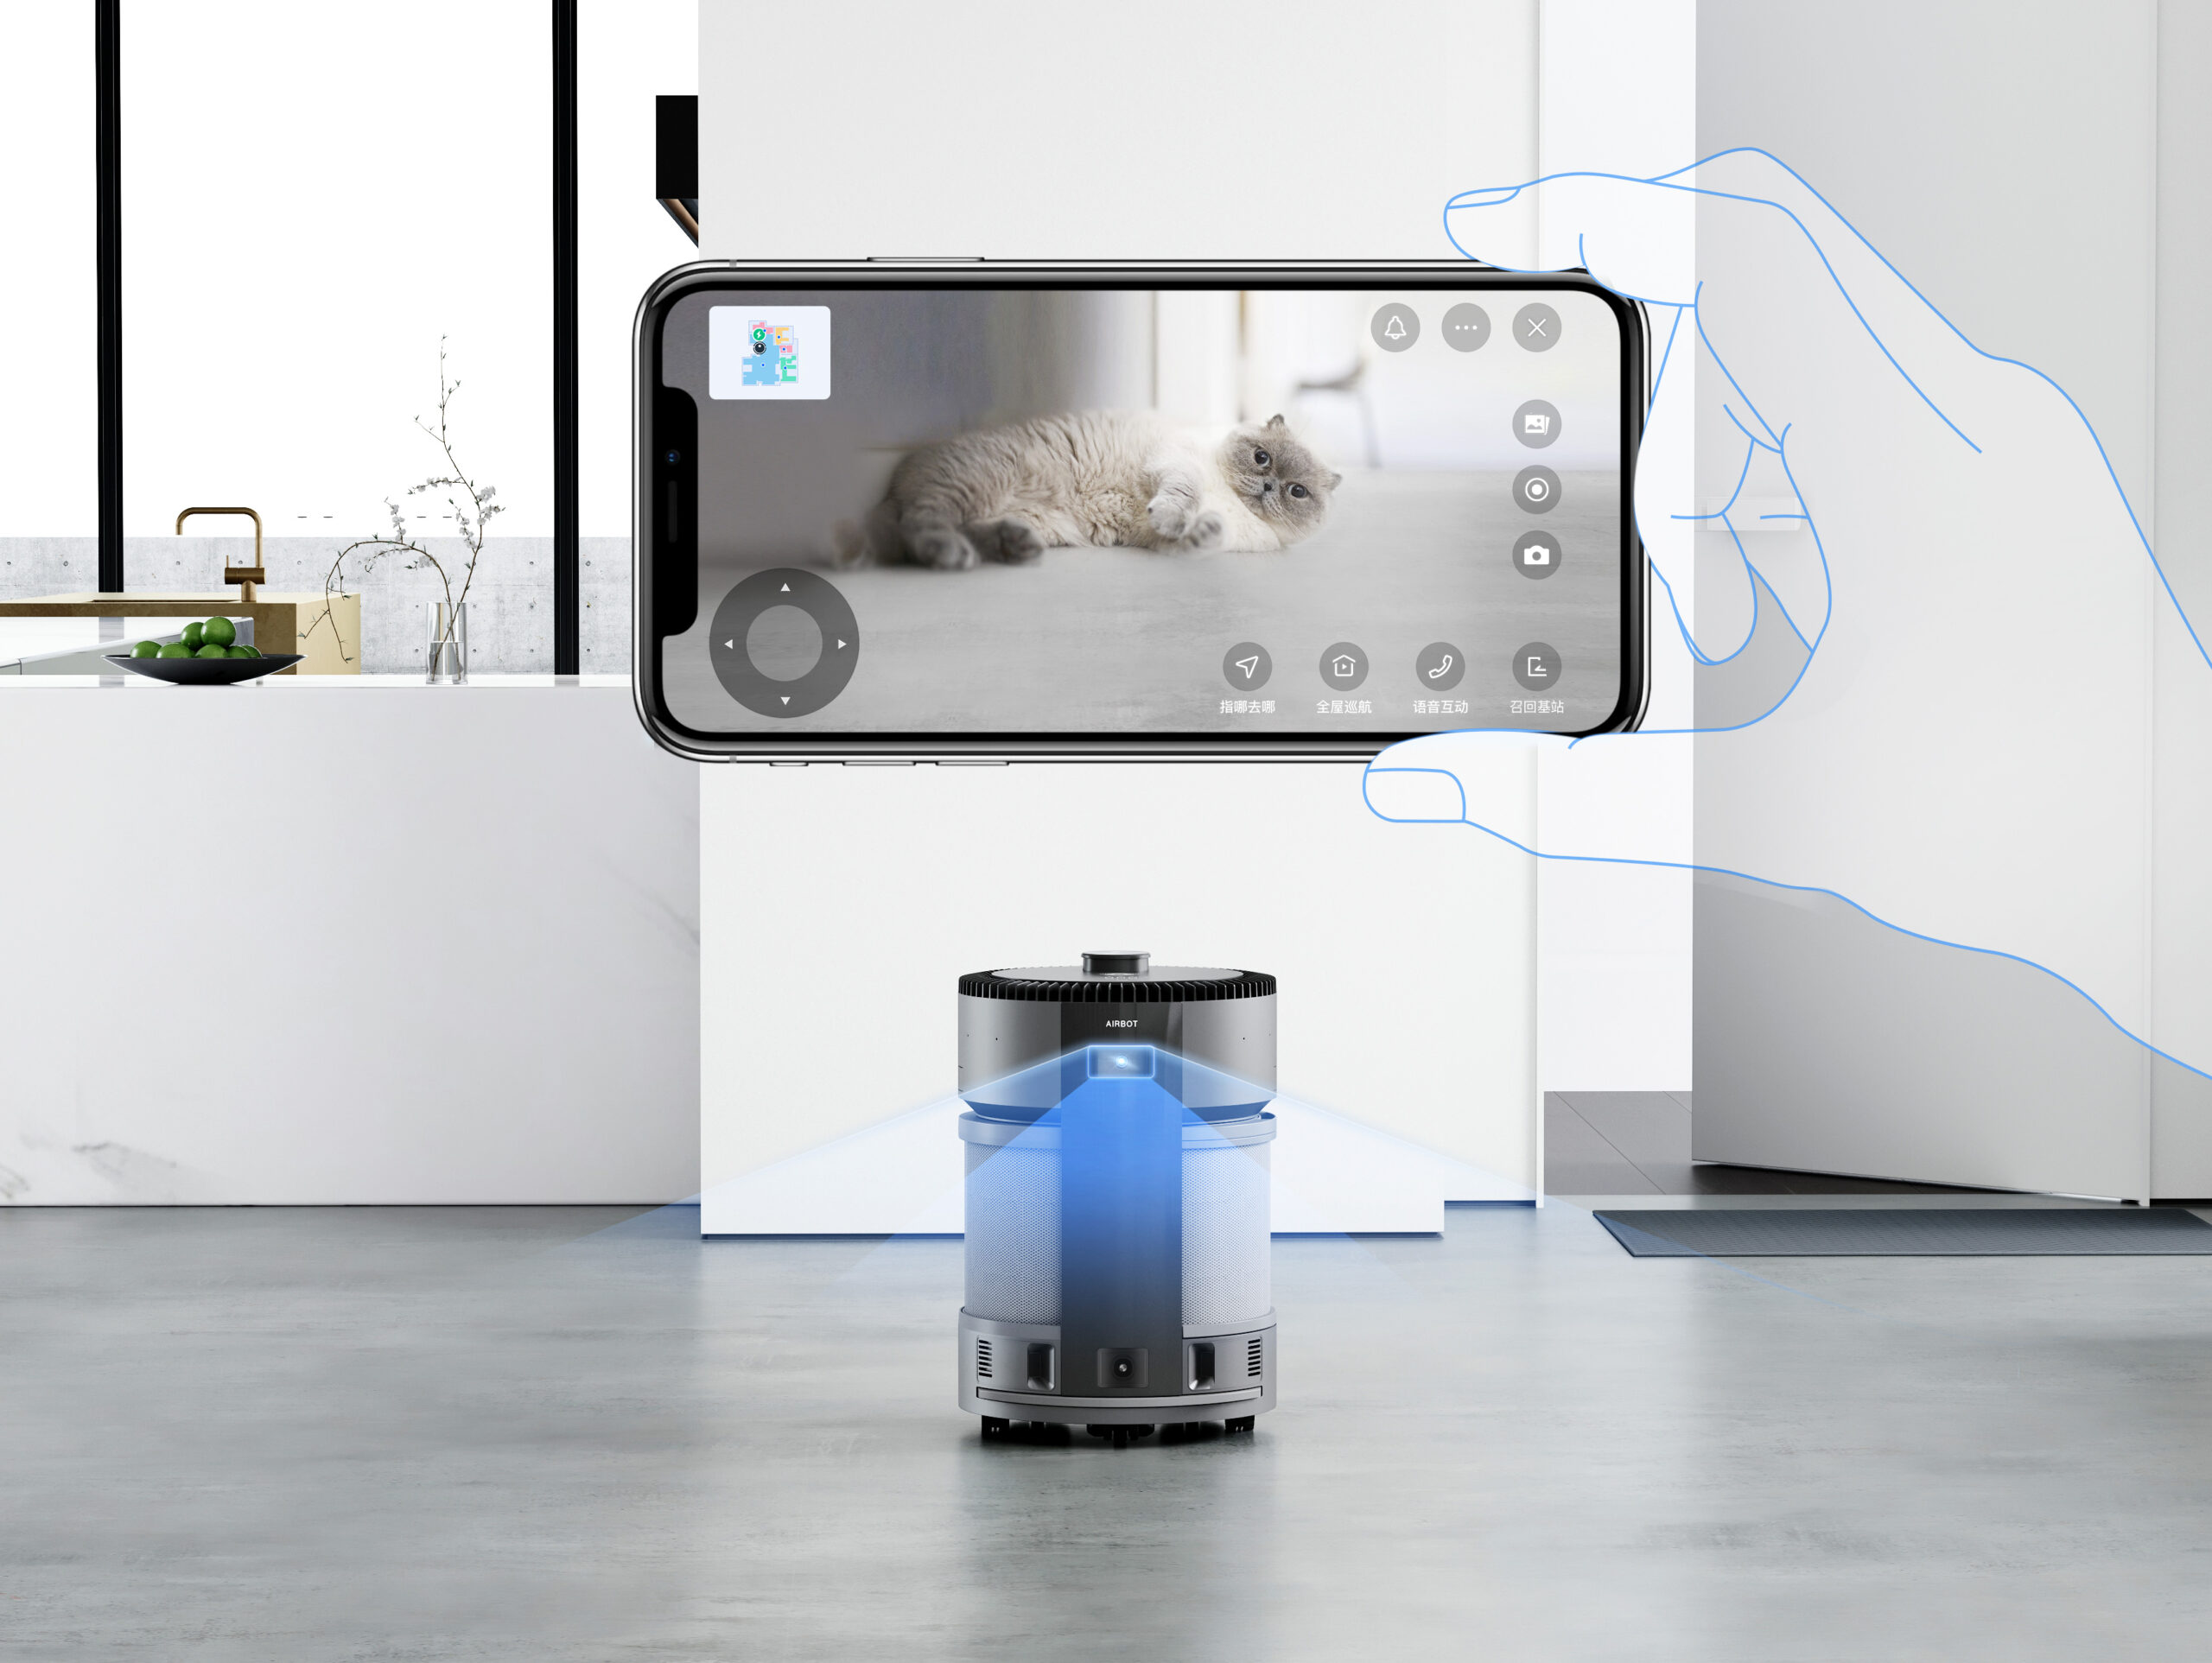 Premium air purification robot that combines performance convenience and design